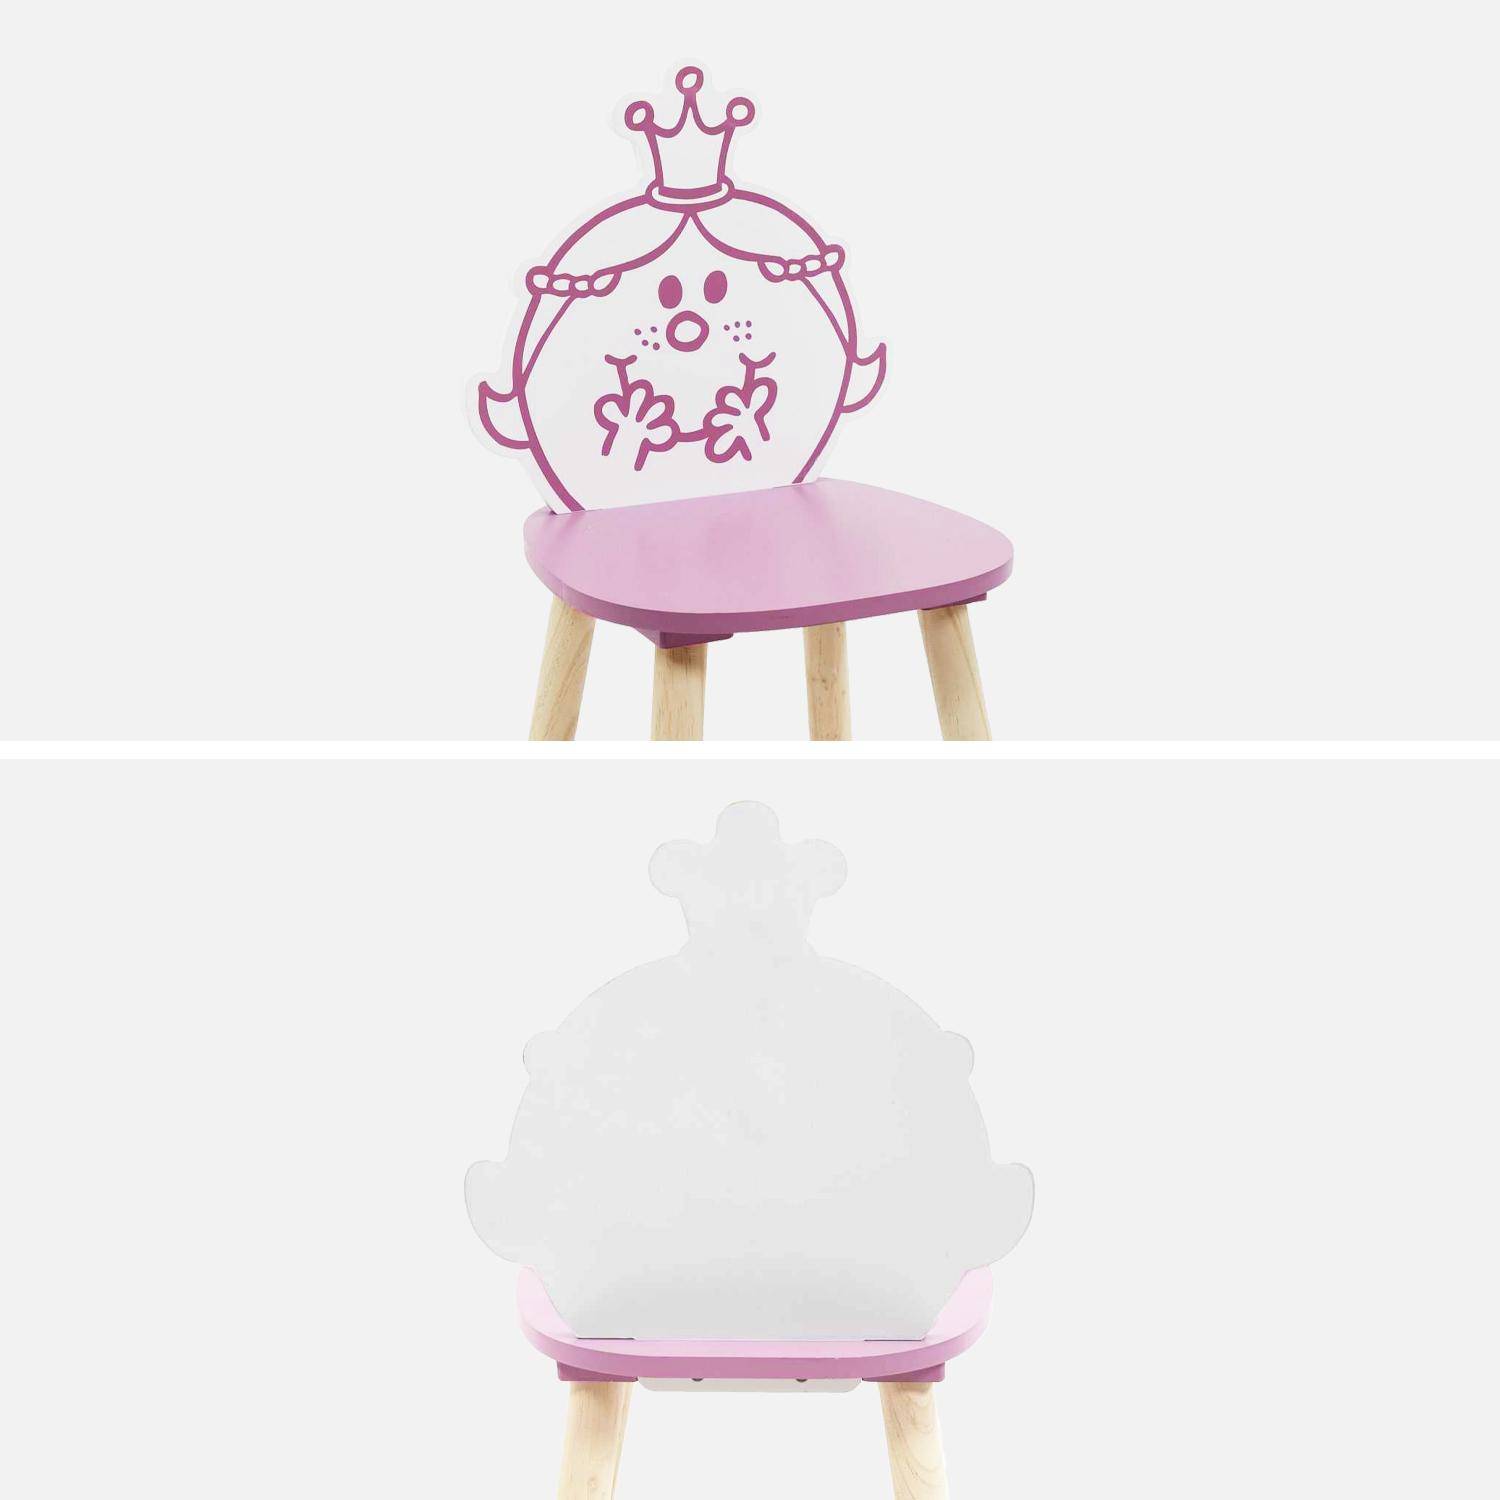 Set of 2 children's chairs, Mr. Men & Little Miss collection - Little Miss Princess, pink,sweeek,Photo6